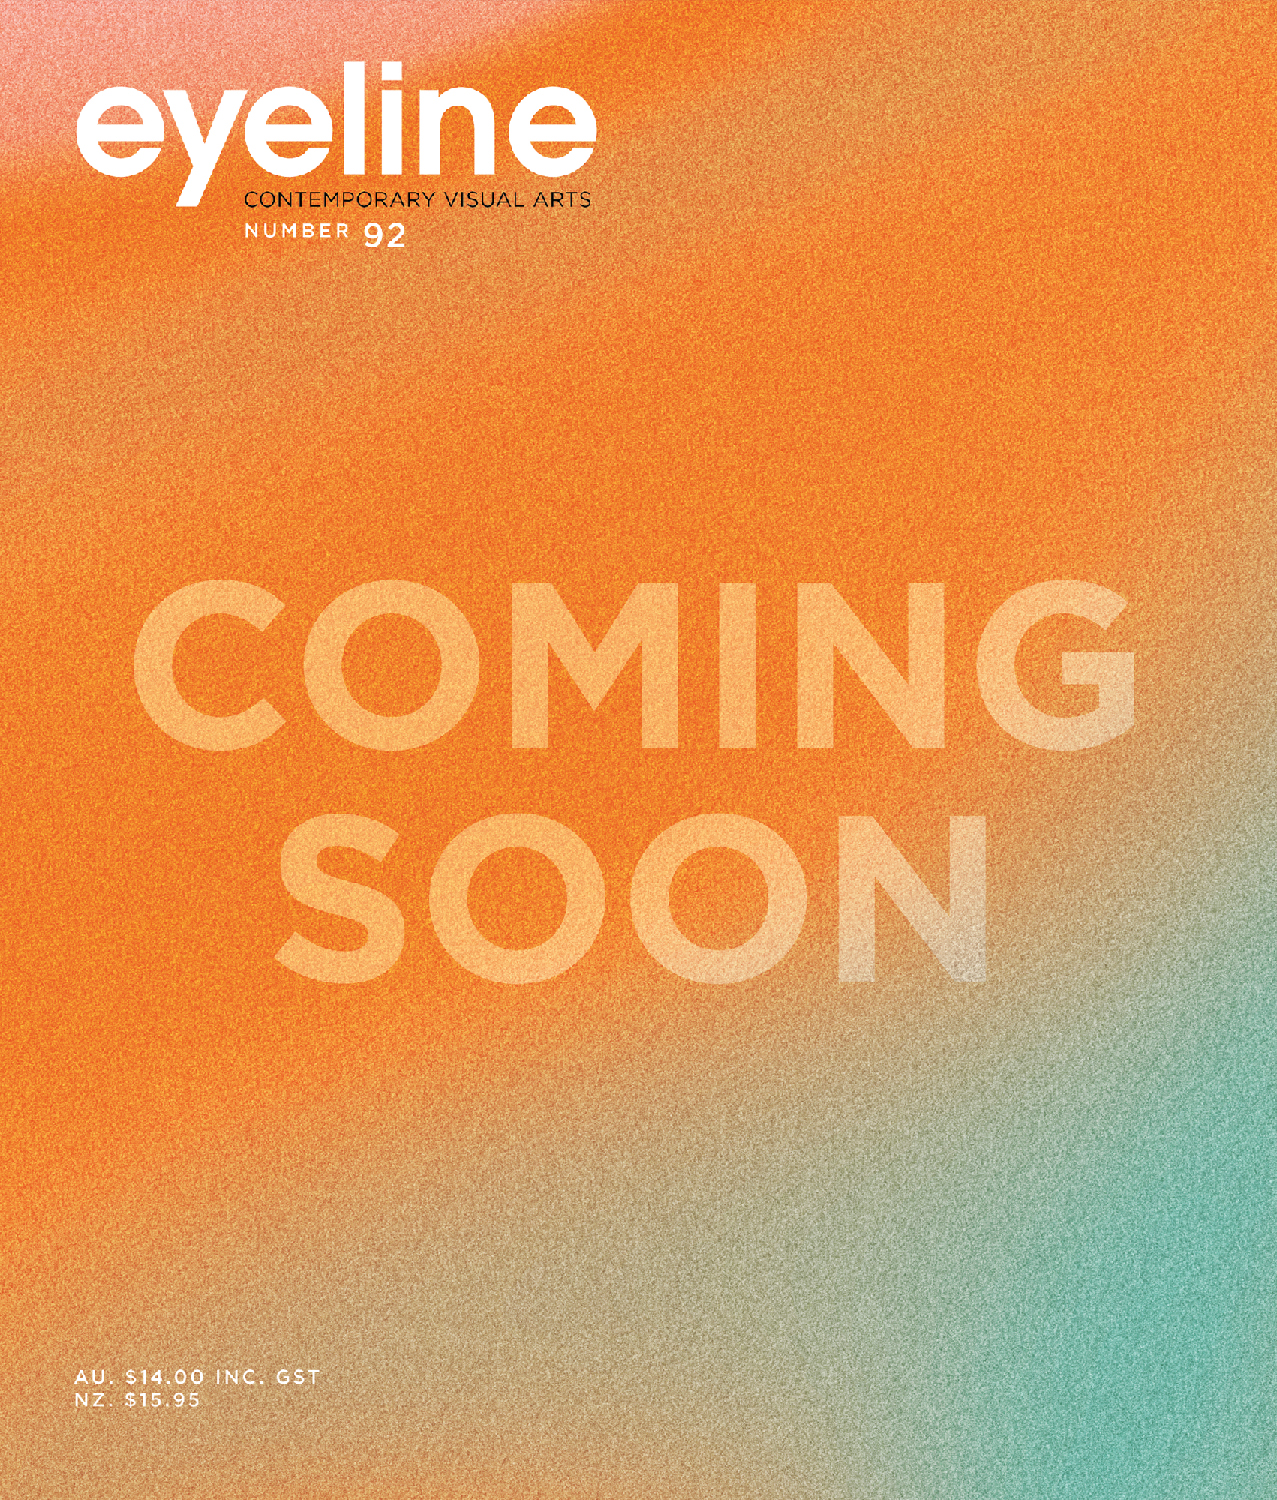 Eyeline 92